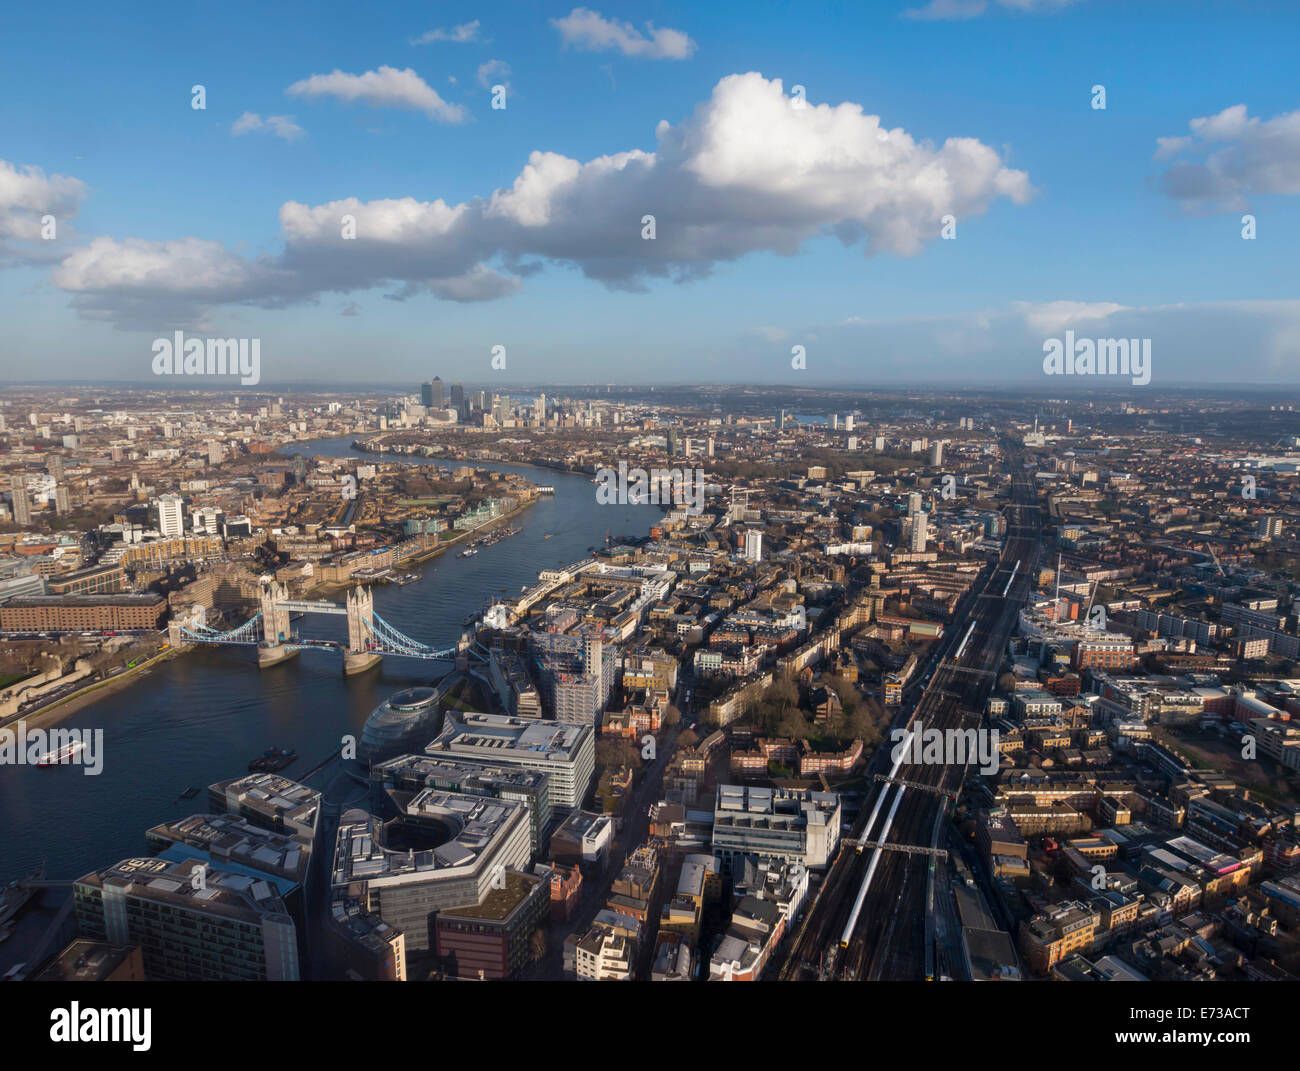 Aerial cityscape showing River Thames, Tower Bridge and railway tracks, London, England, United Kingdom, Europe Stock Photo